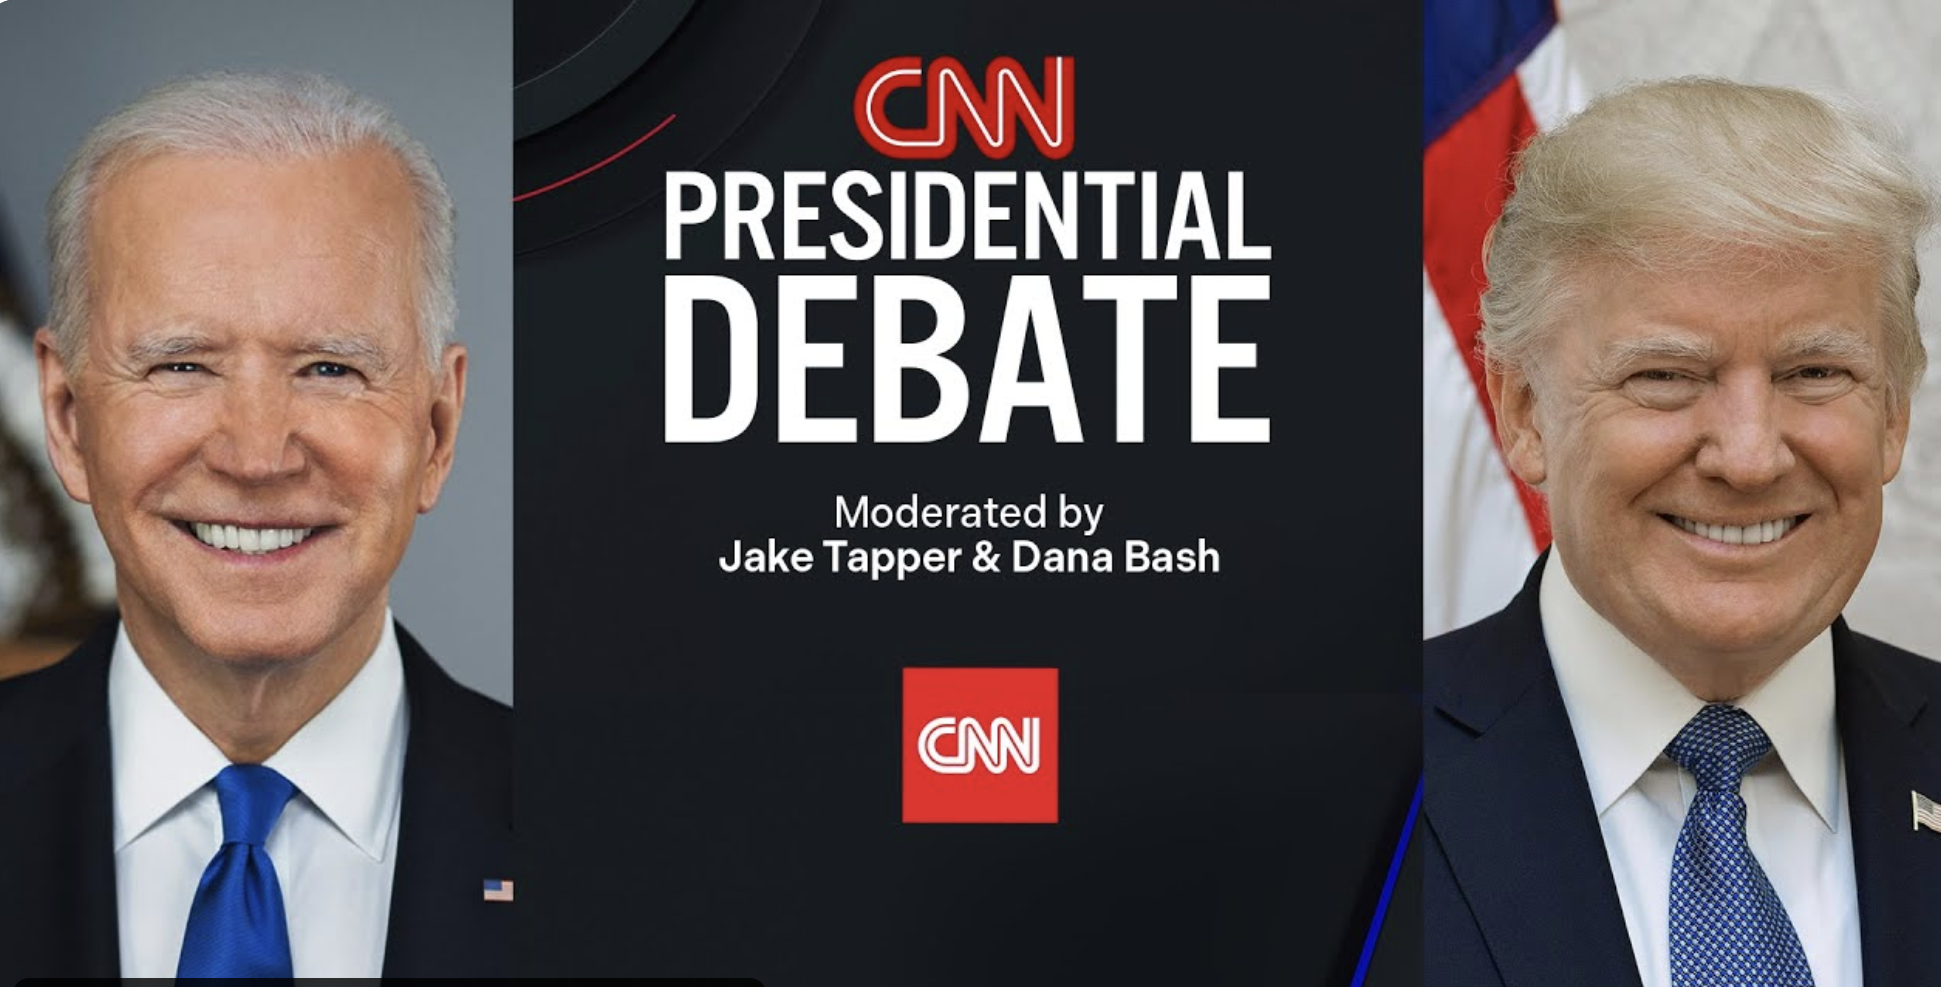 LIVE Thursday 8:30pm EST: CNN Presidential Debate